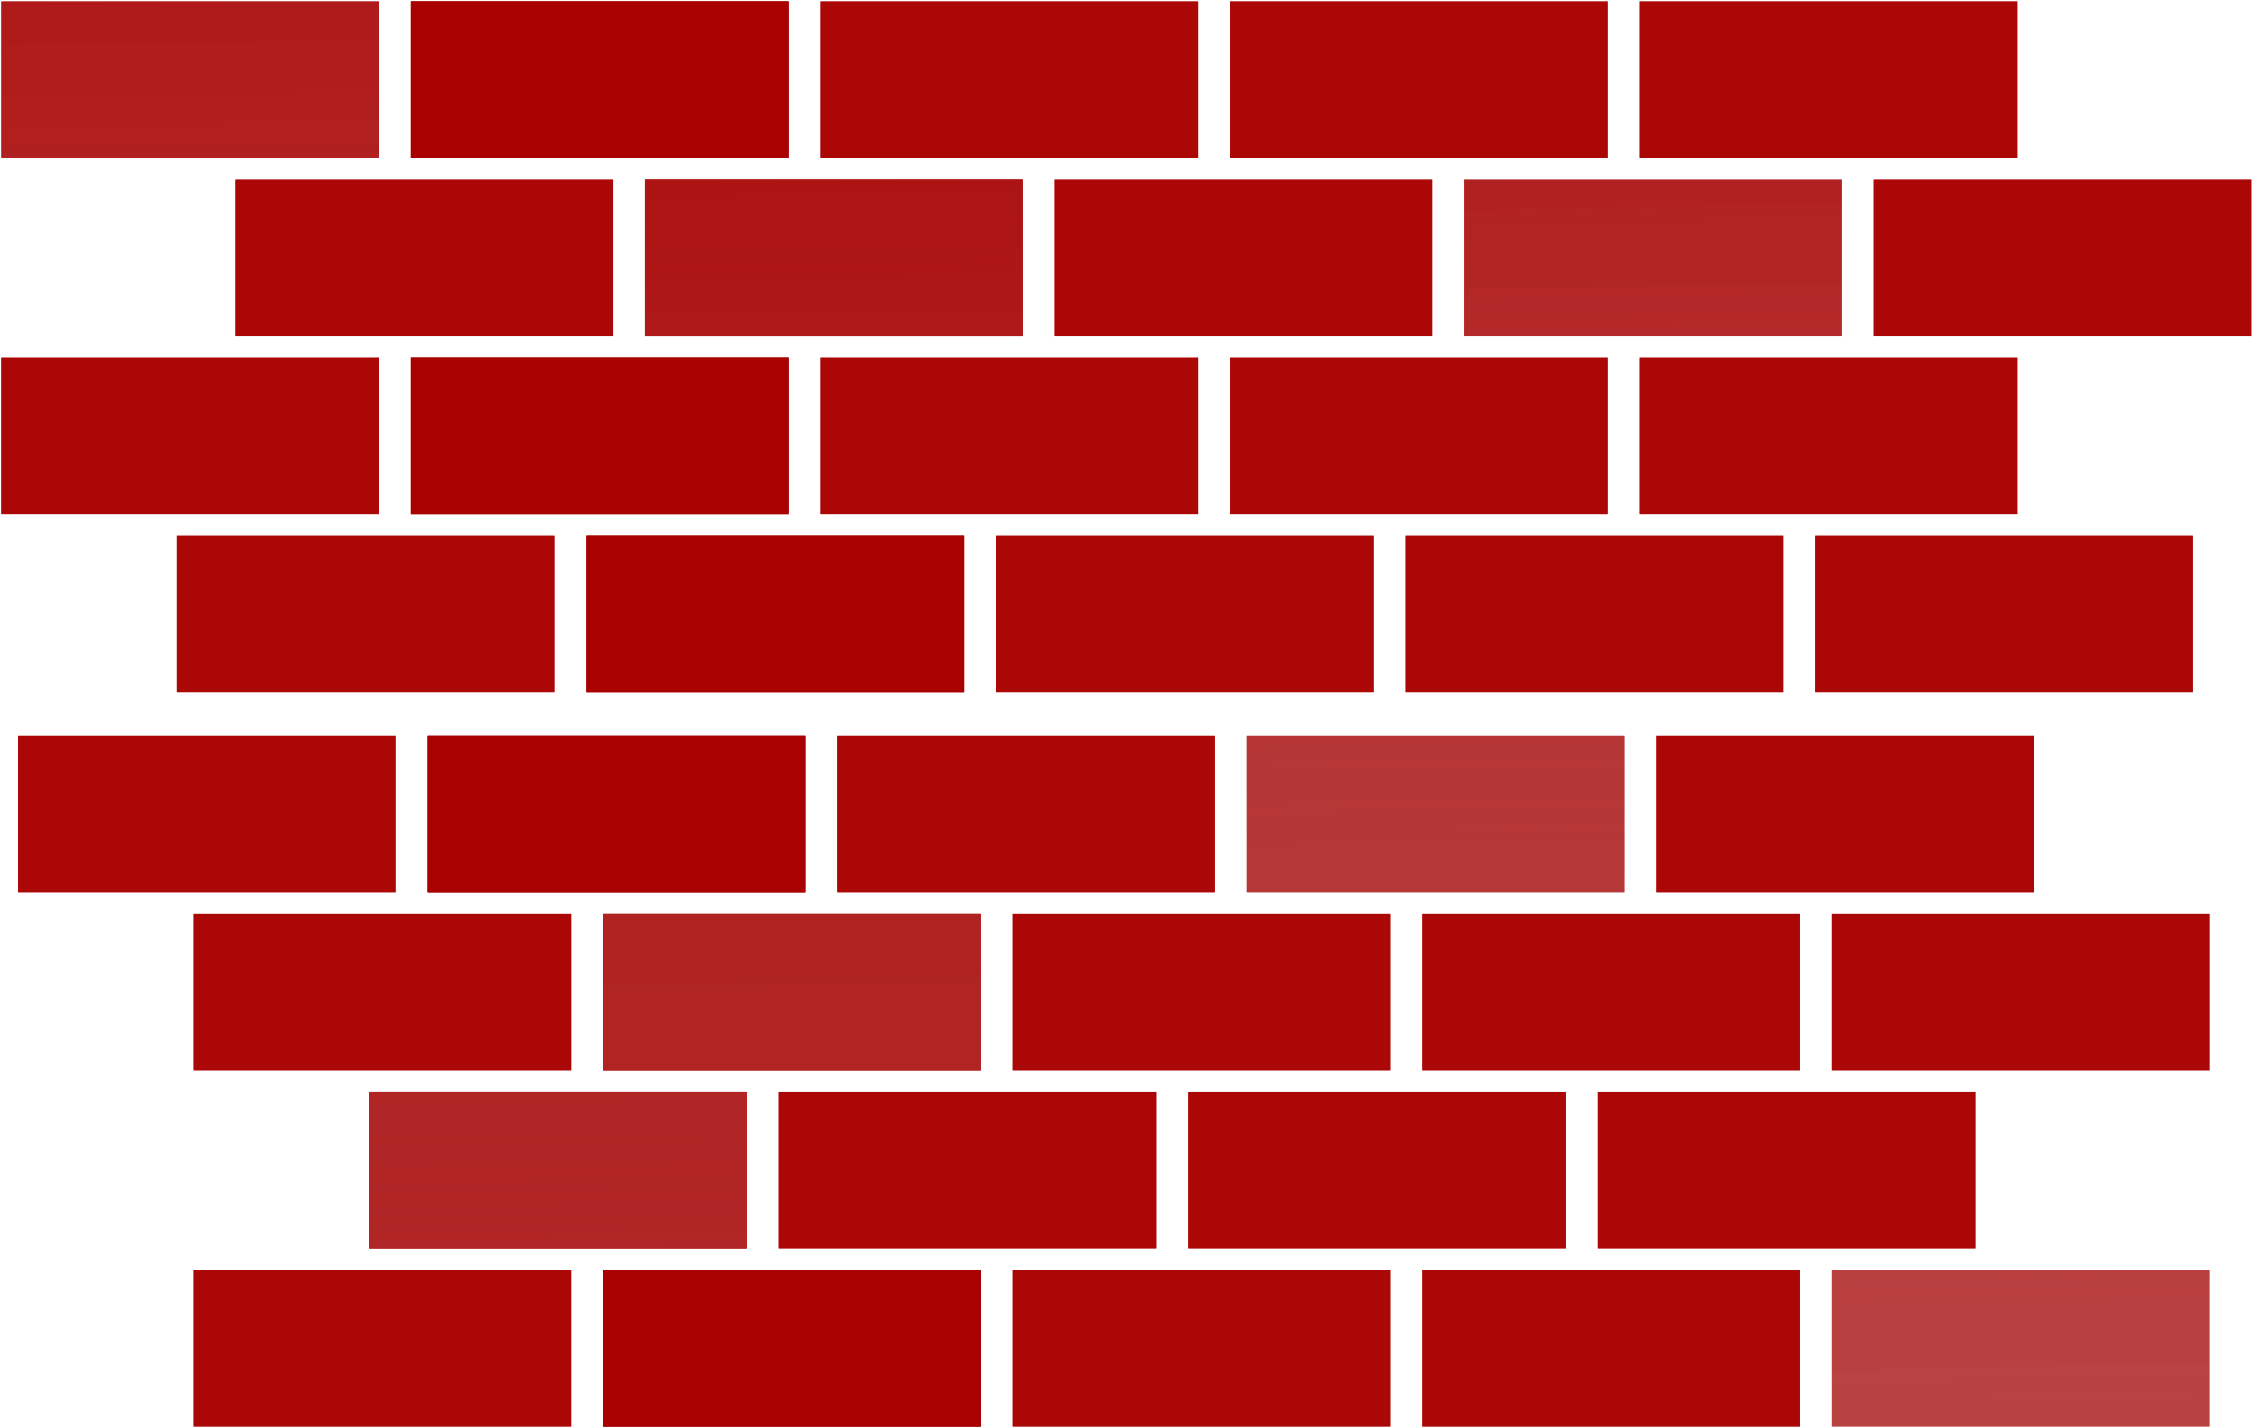 Red Brick Wall Pattern